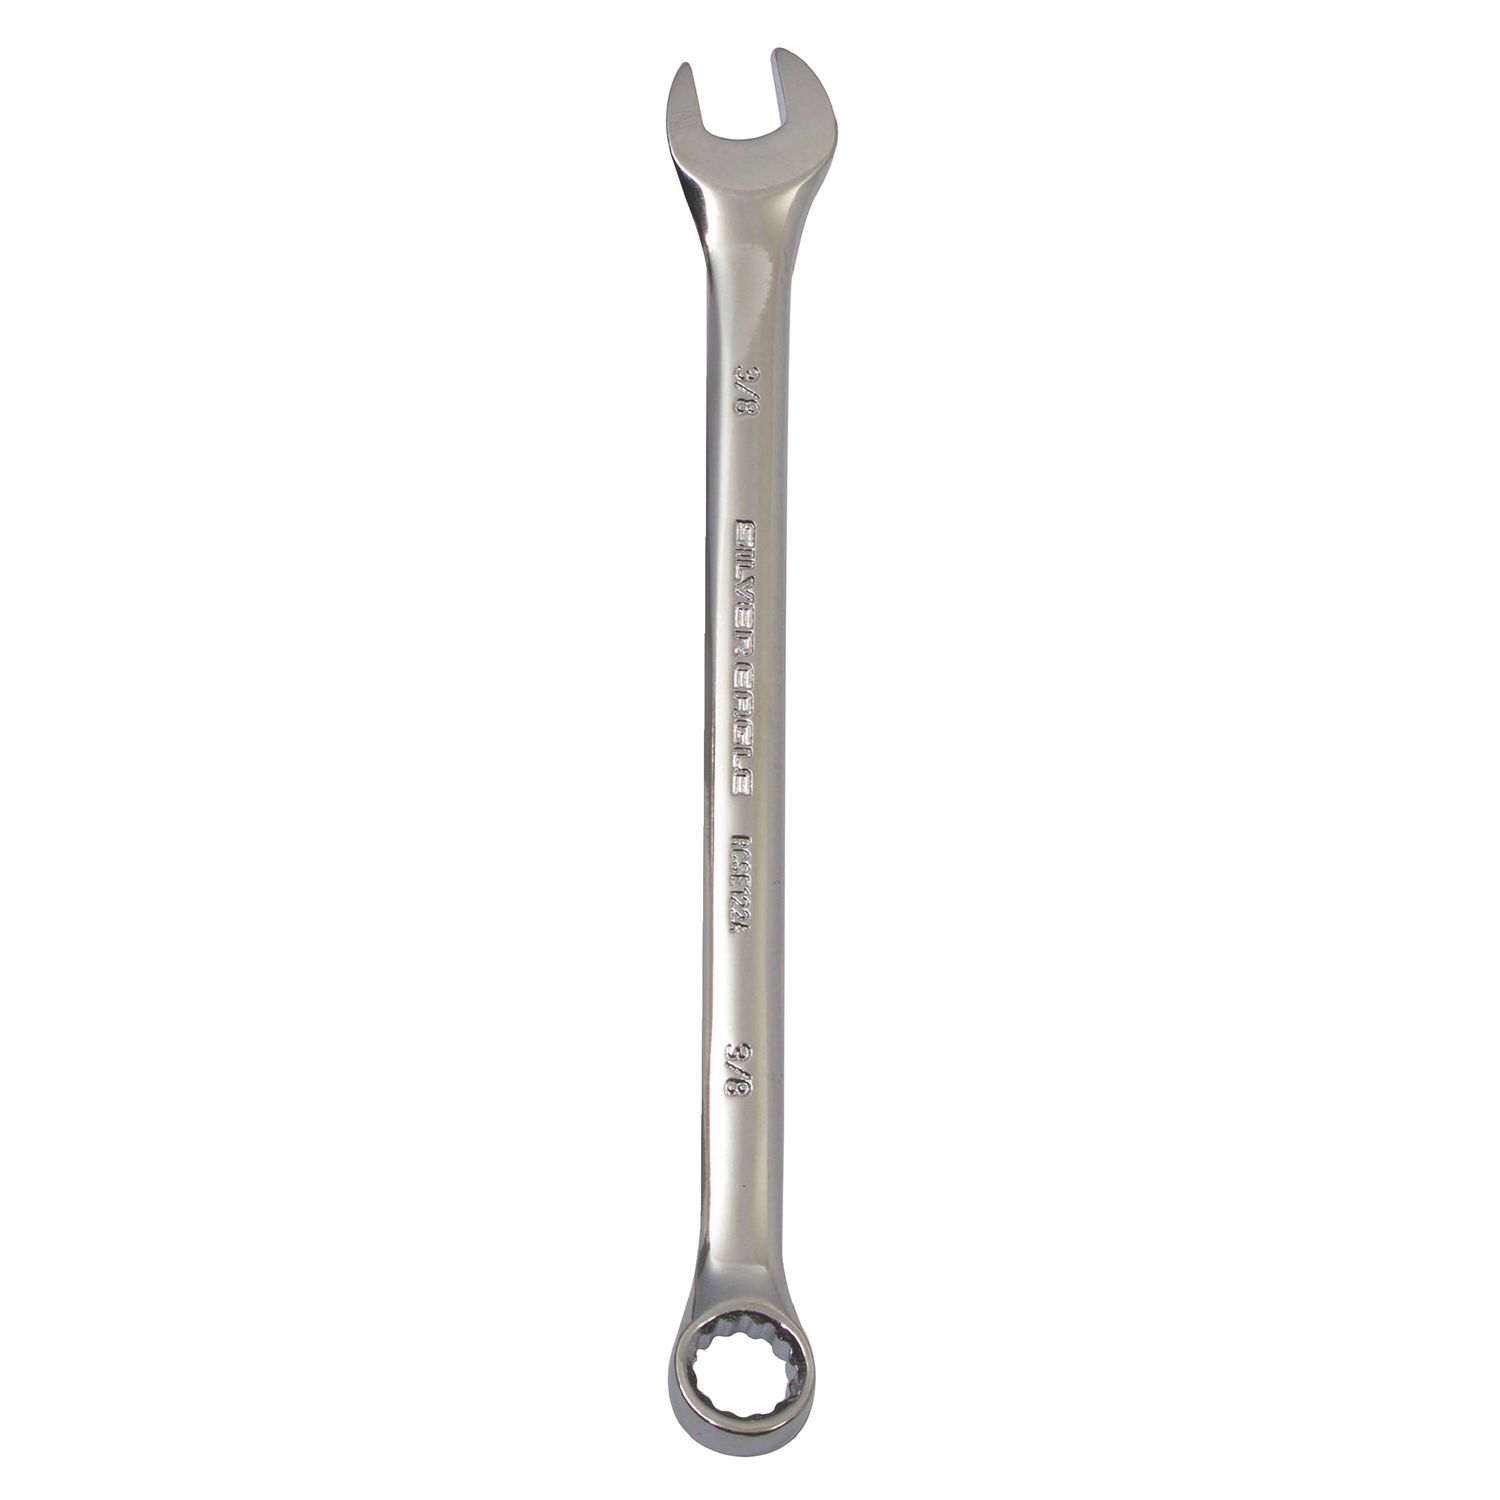 MOTA Tools 39184 Blj1 Tips, Pack of 5, Silver, 25 mm